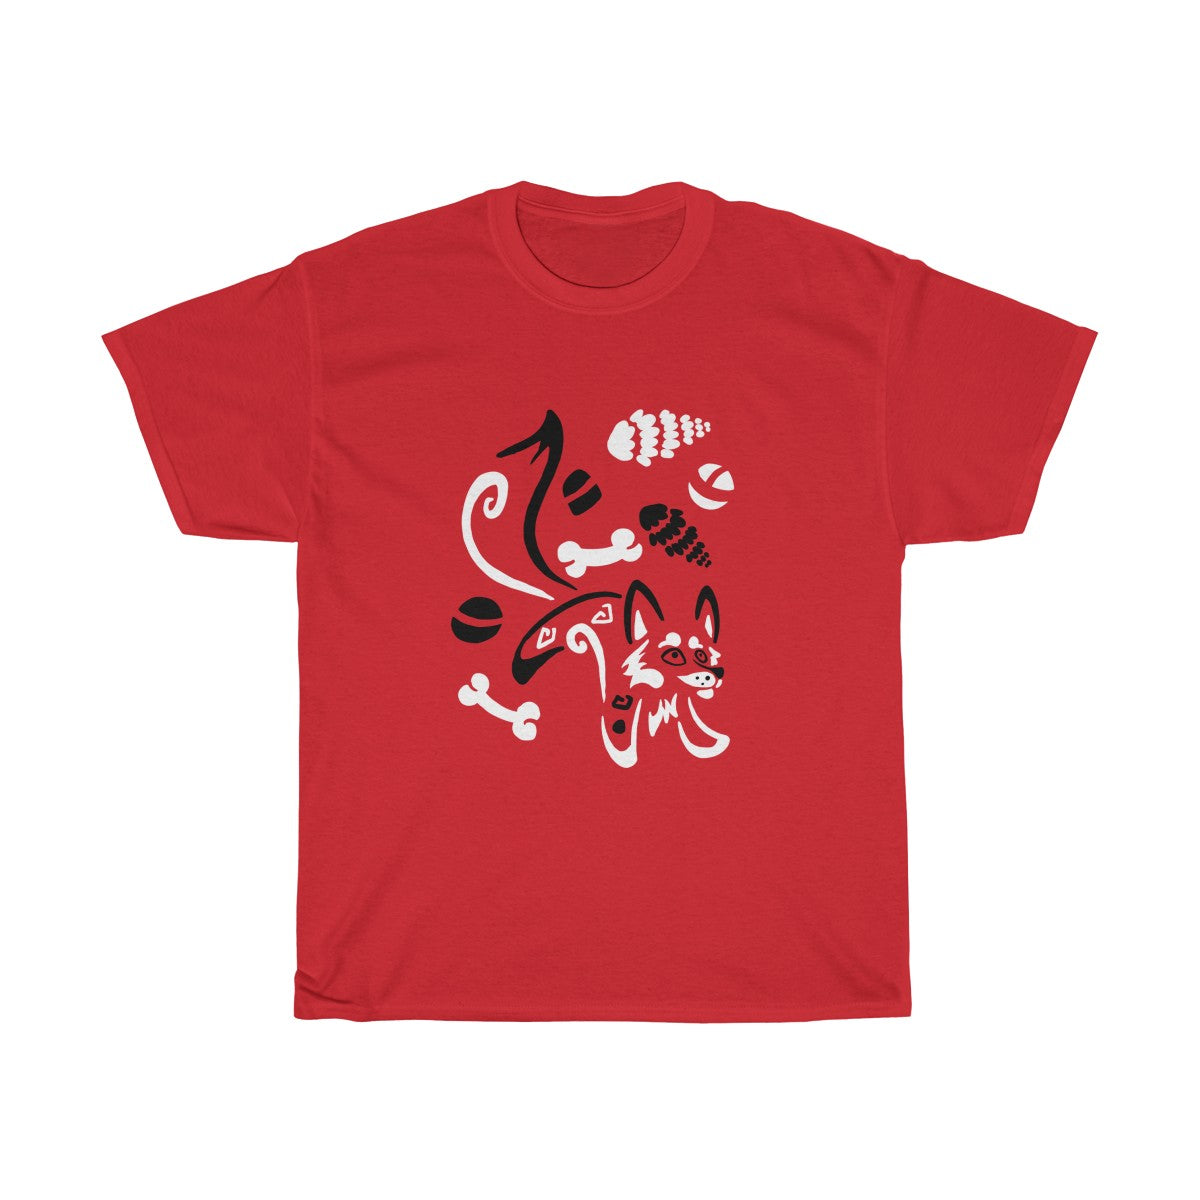 Yotes & Bones - T-Shirt T-Shirt Dire Creatures Red S 